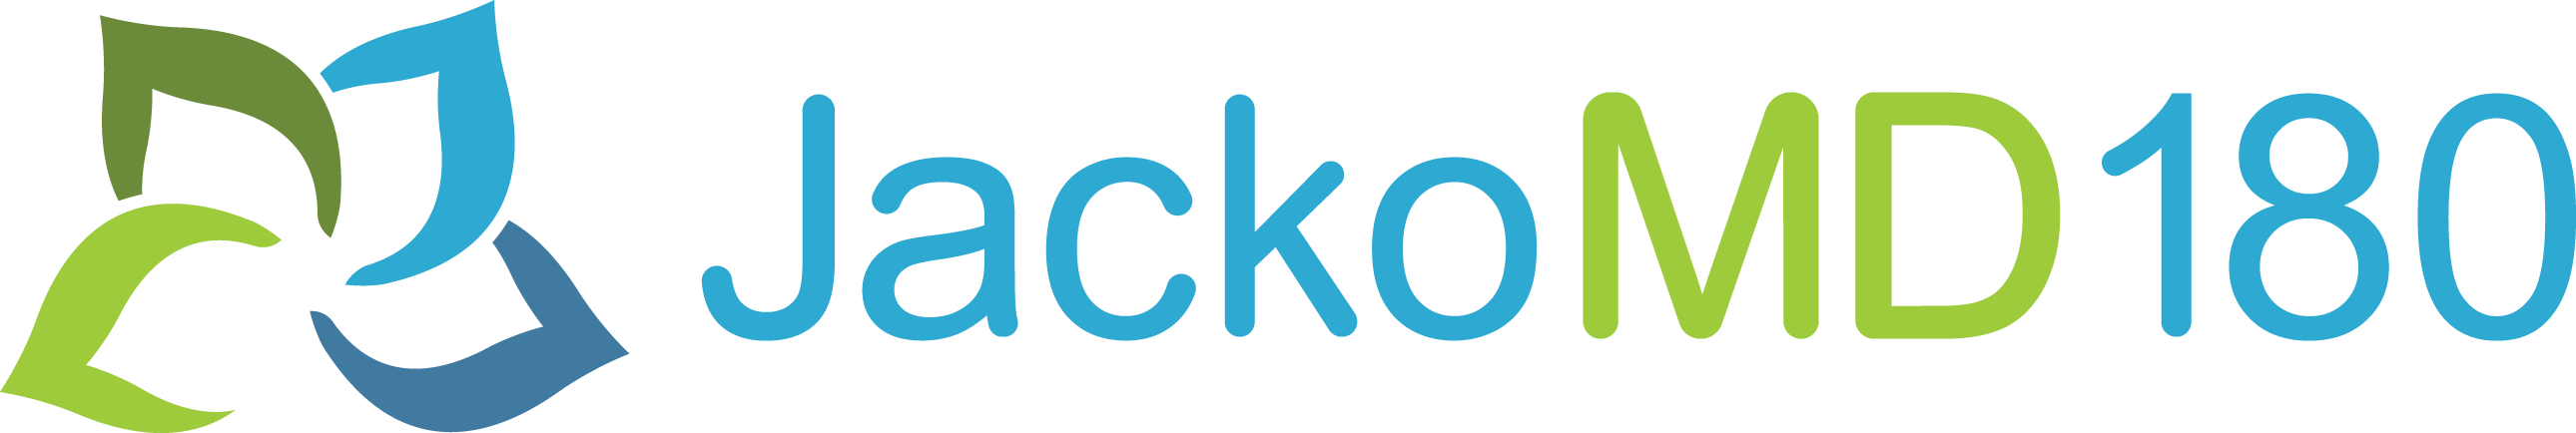 jacko md 180 logo dr. joe jacko's website